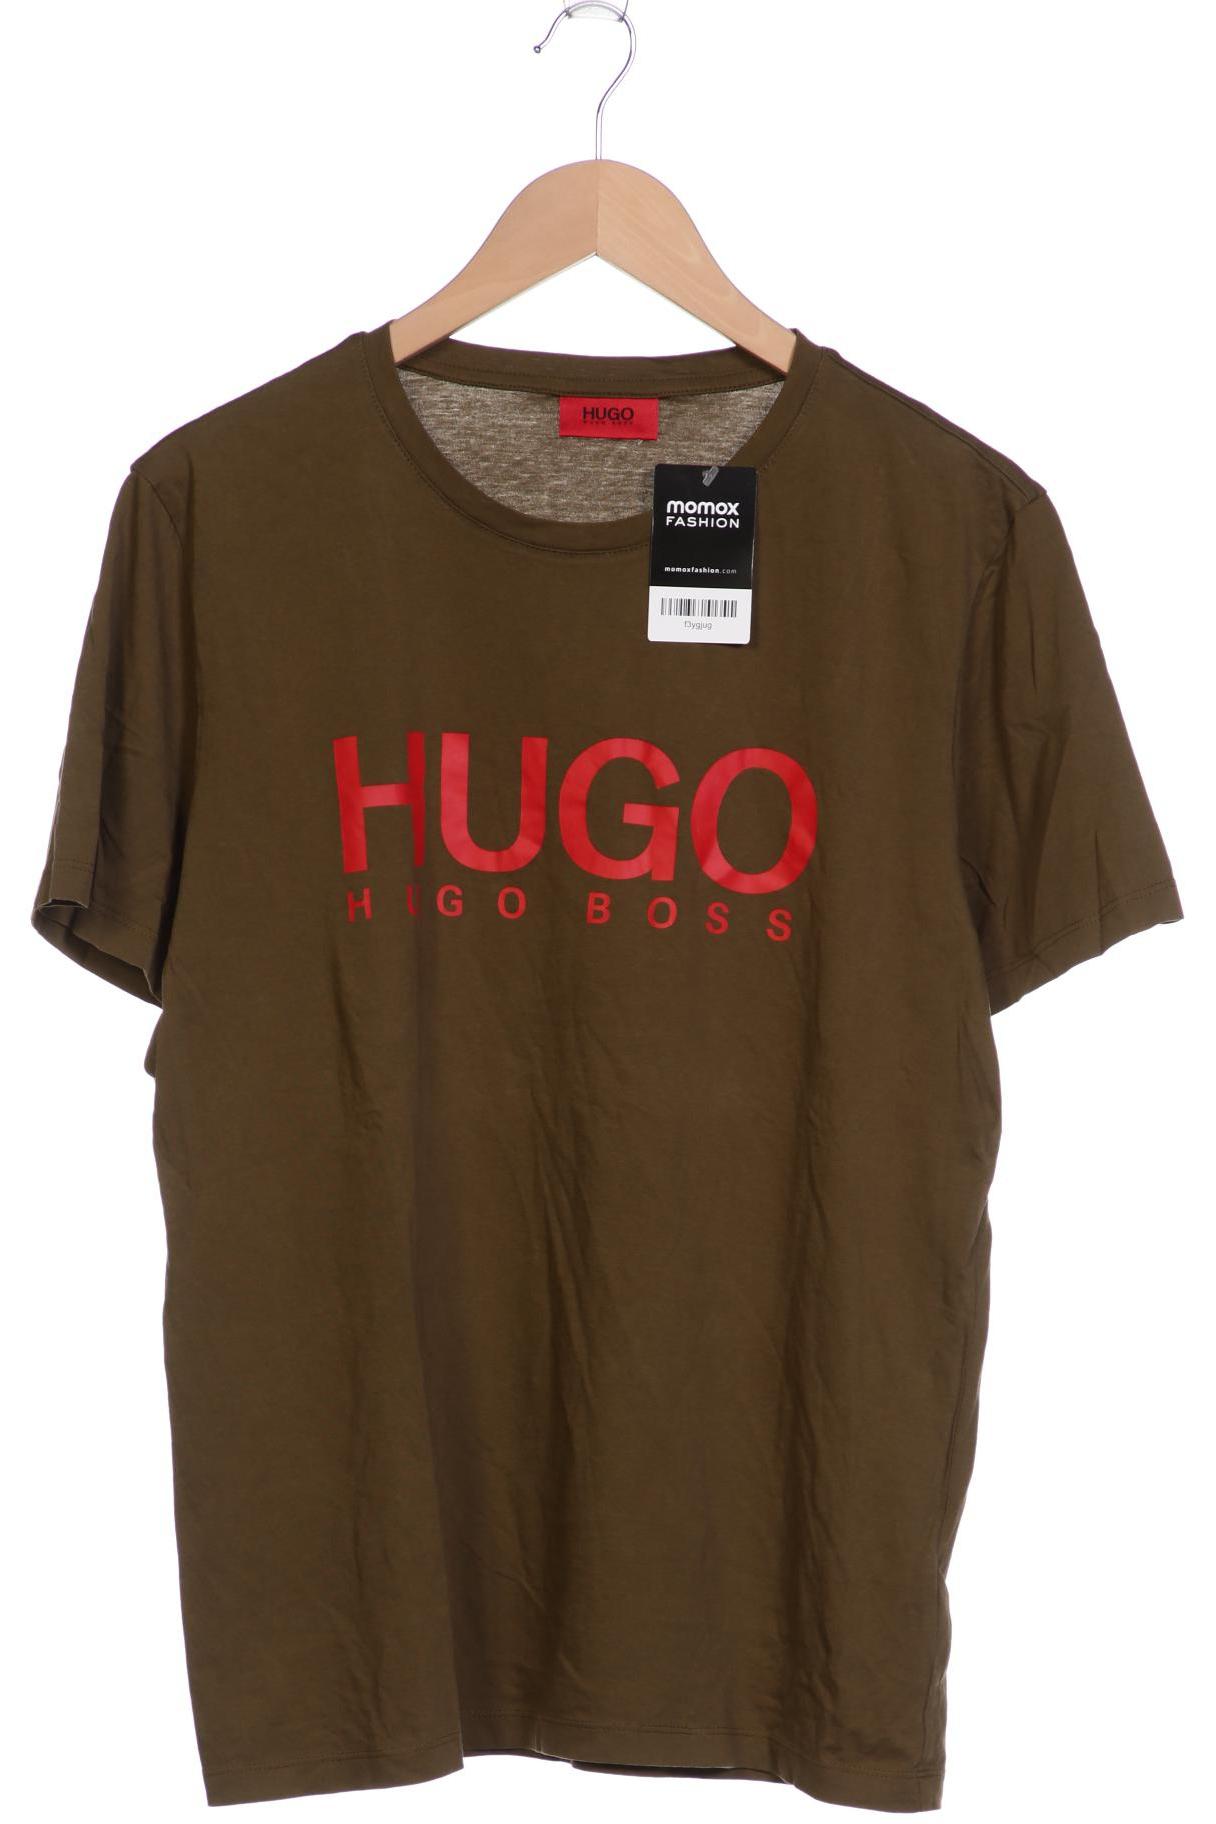 HUGO by Hugo Boss Herren T-Shirt, grün von HUGO by Hugo Boss